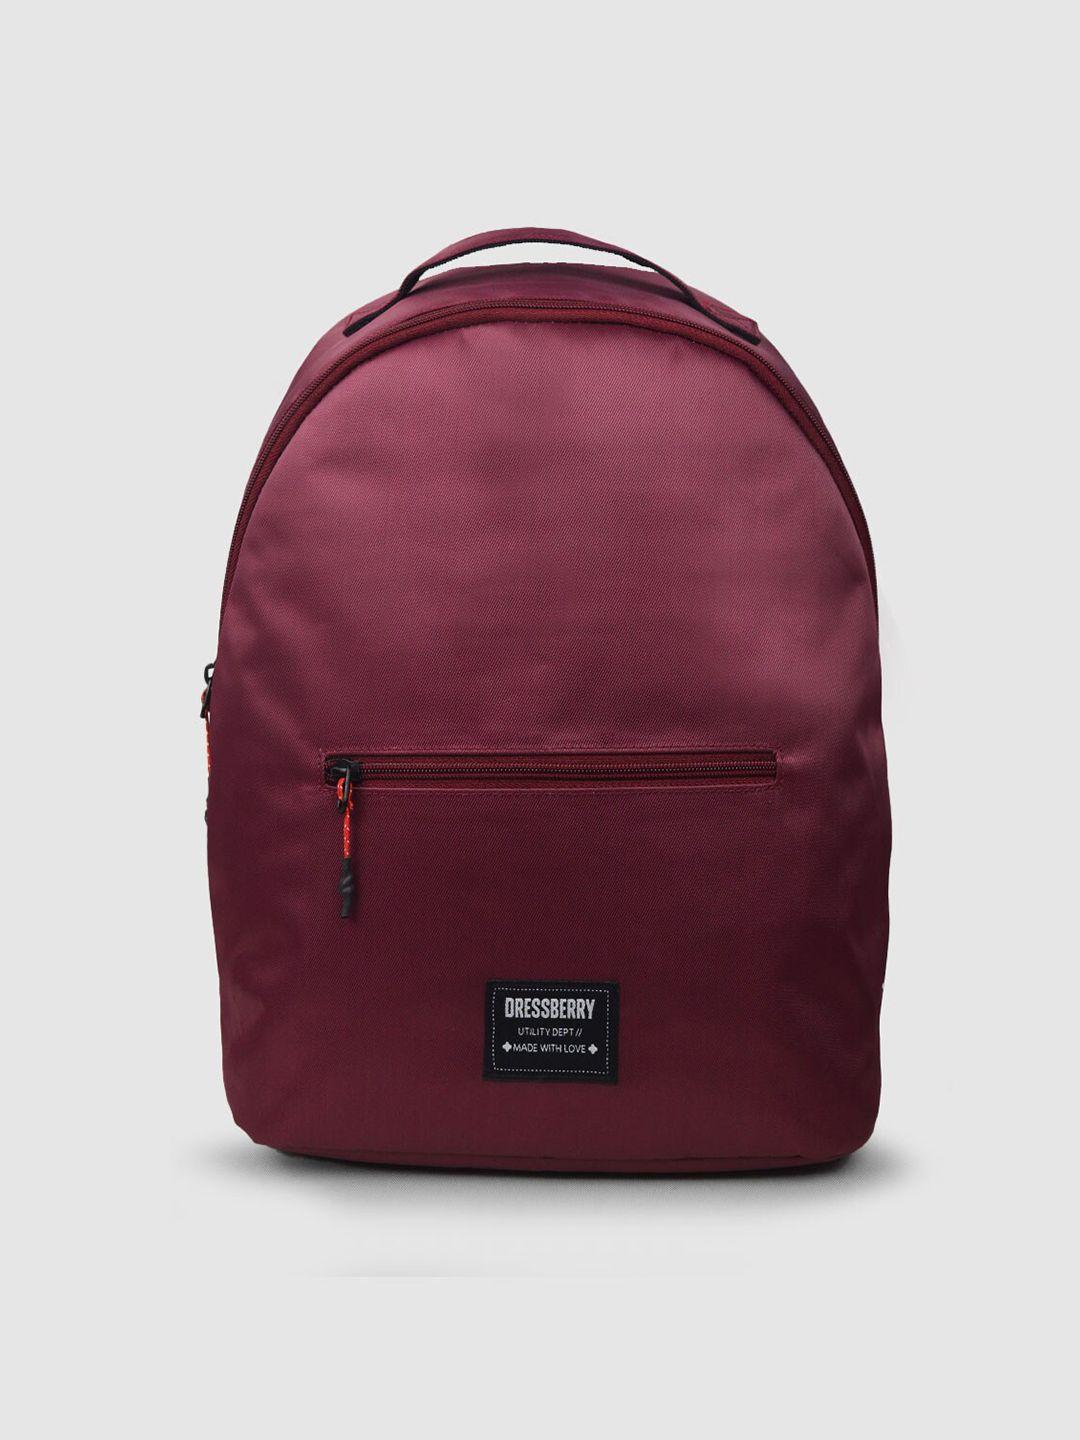 dressberry-women-maroon-small-backpack